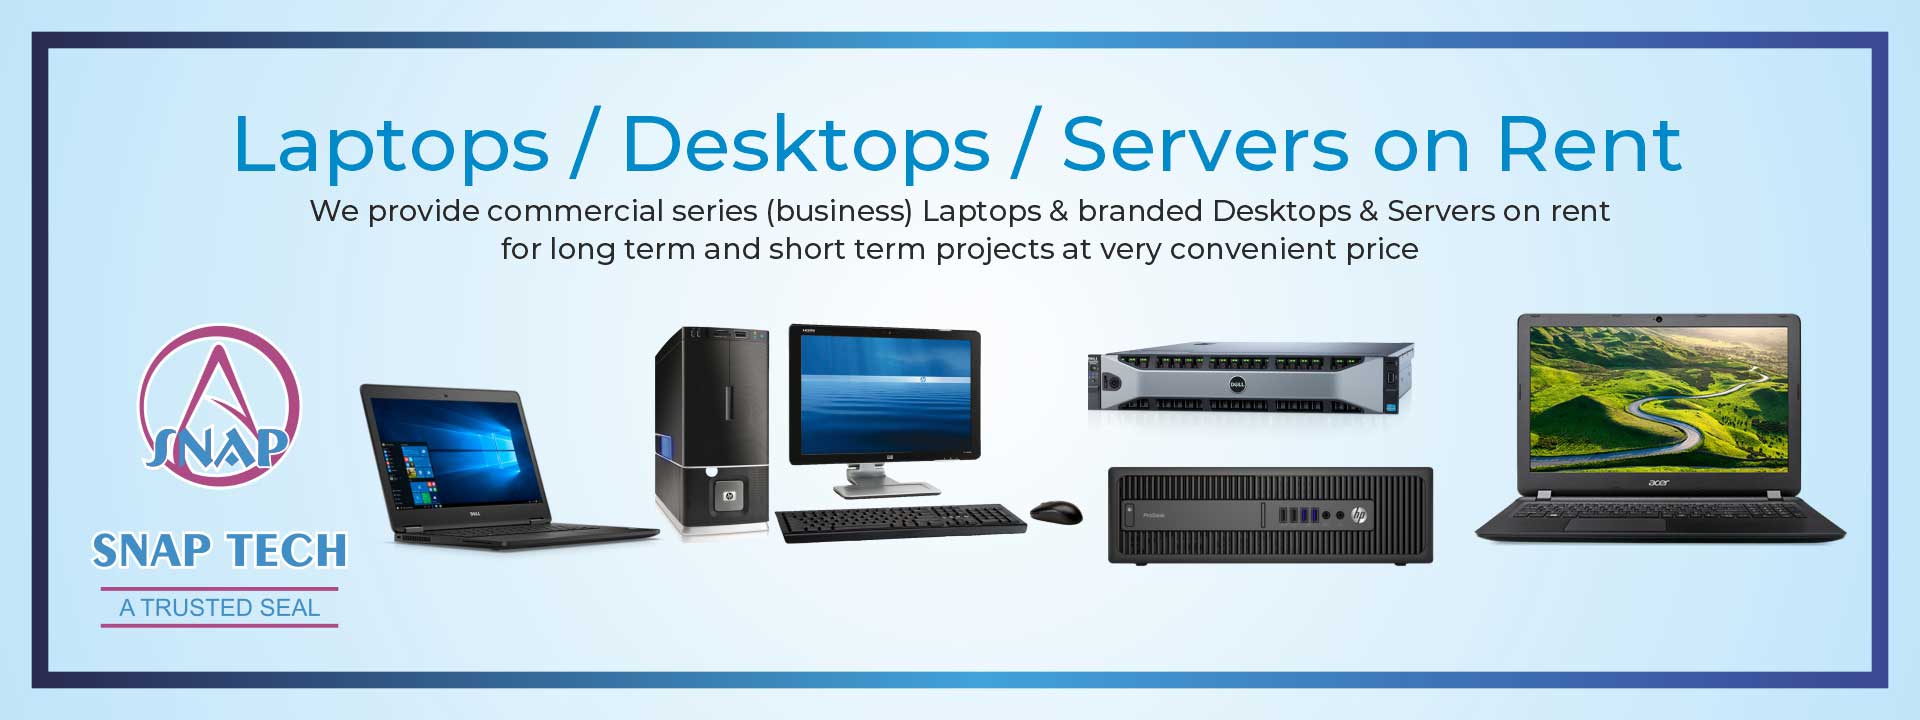 slider2-snaptech-laptops-desktops-server-on-rent